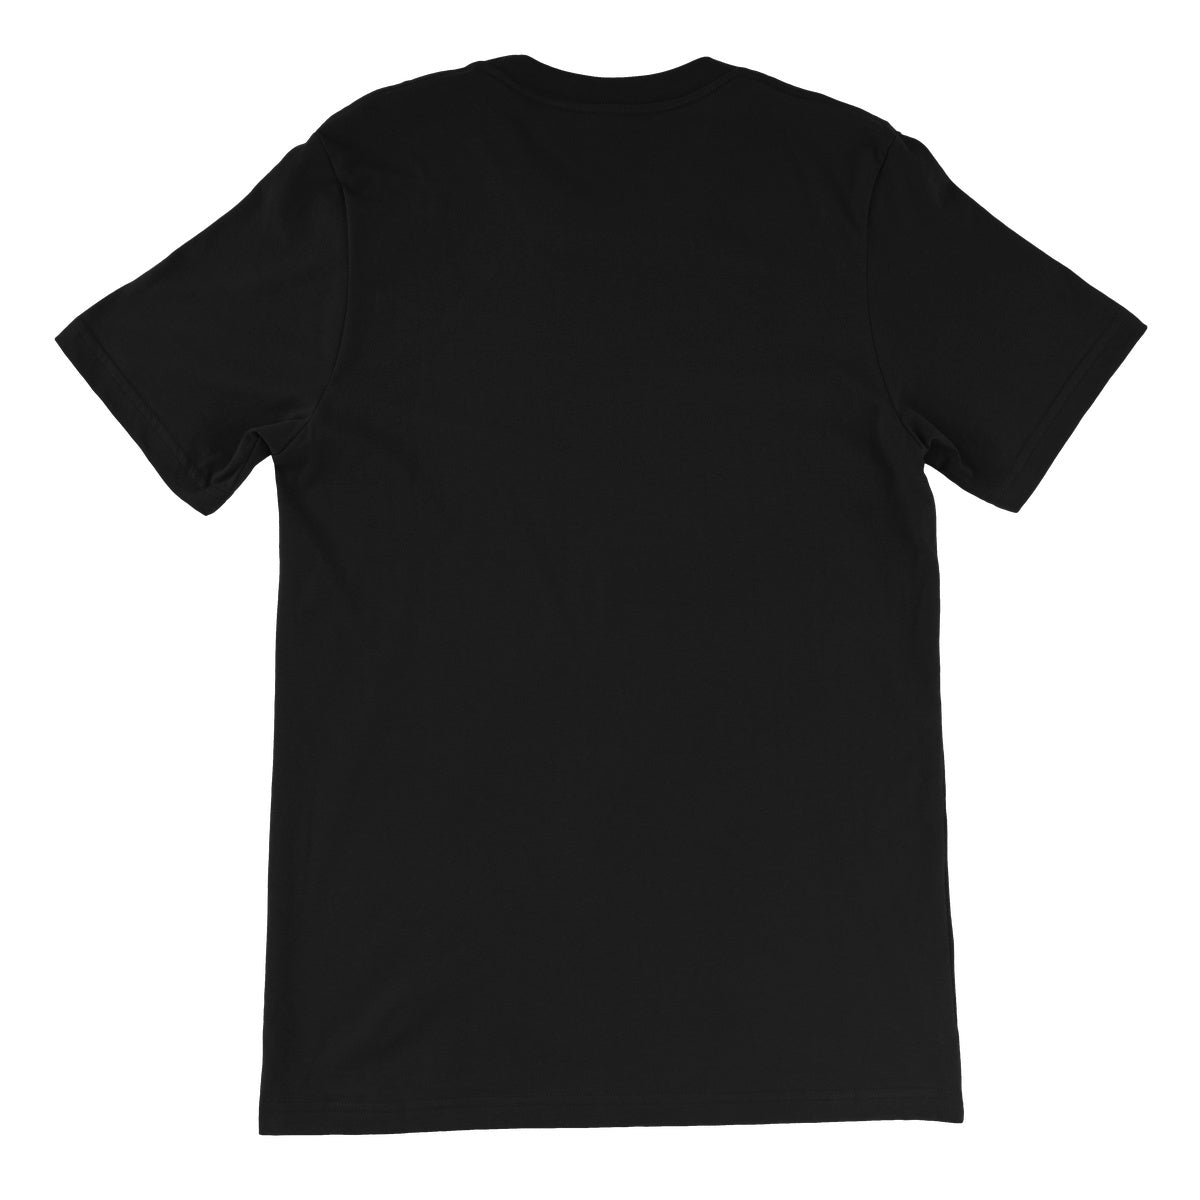 Davey Richards Bite First Black Unisex Short Sleeve T-Shirt